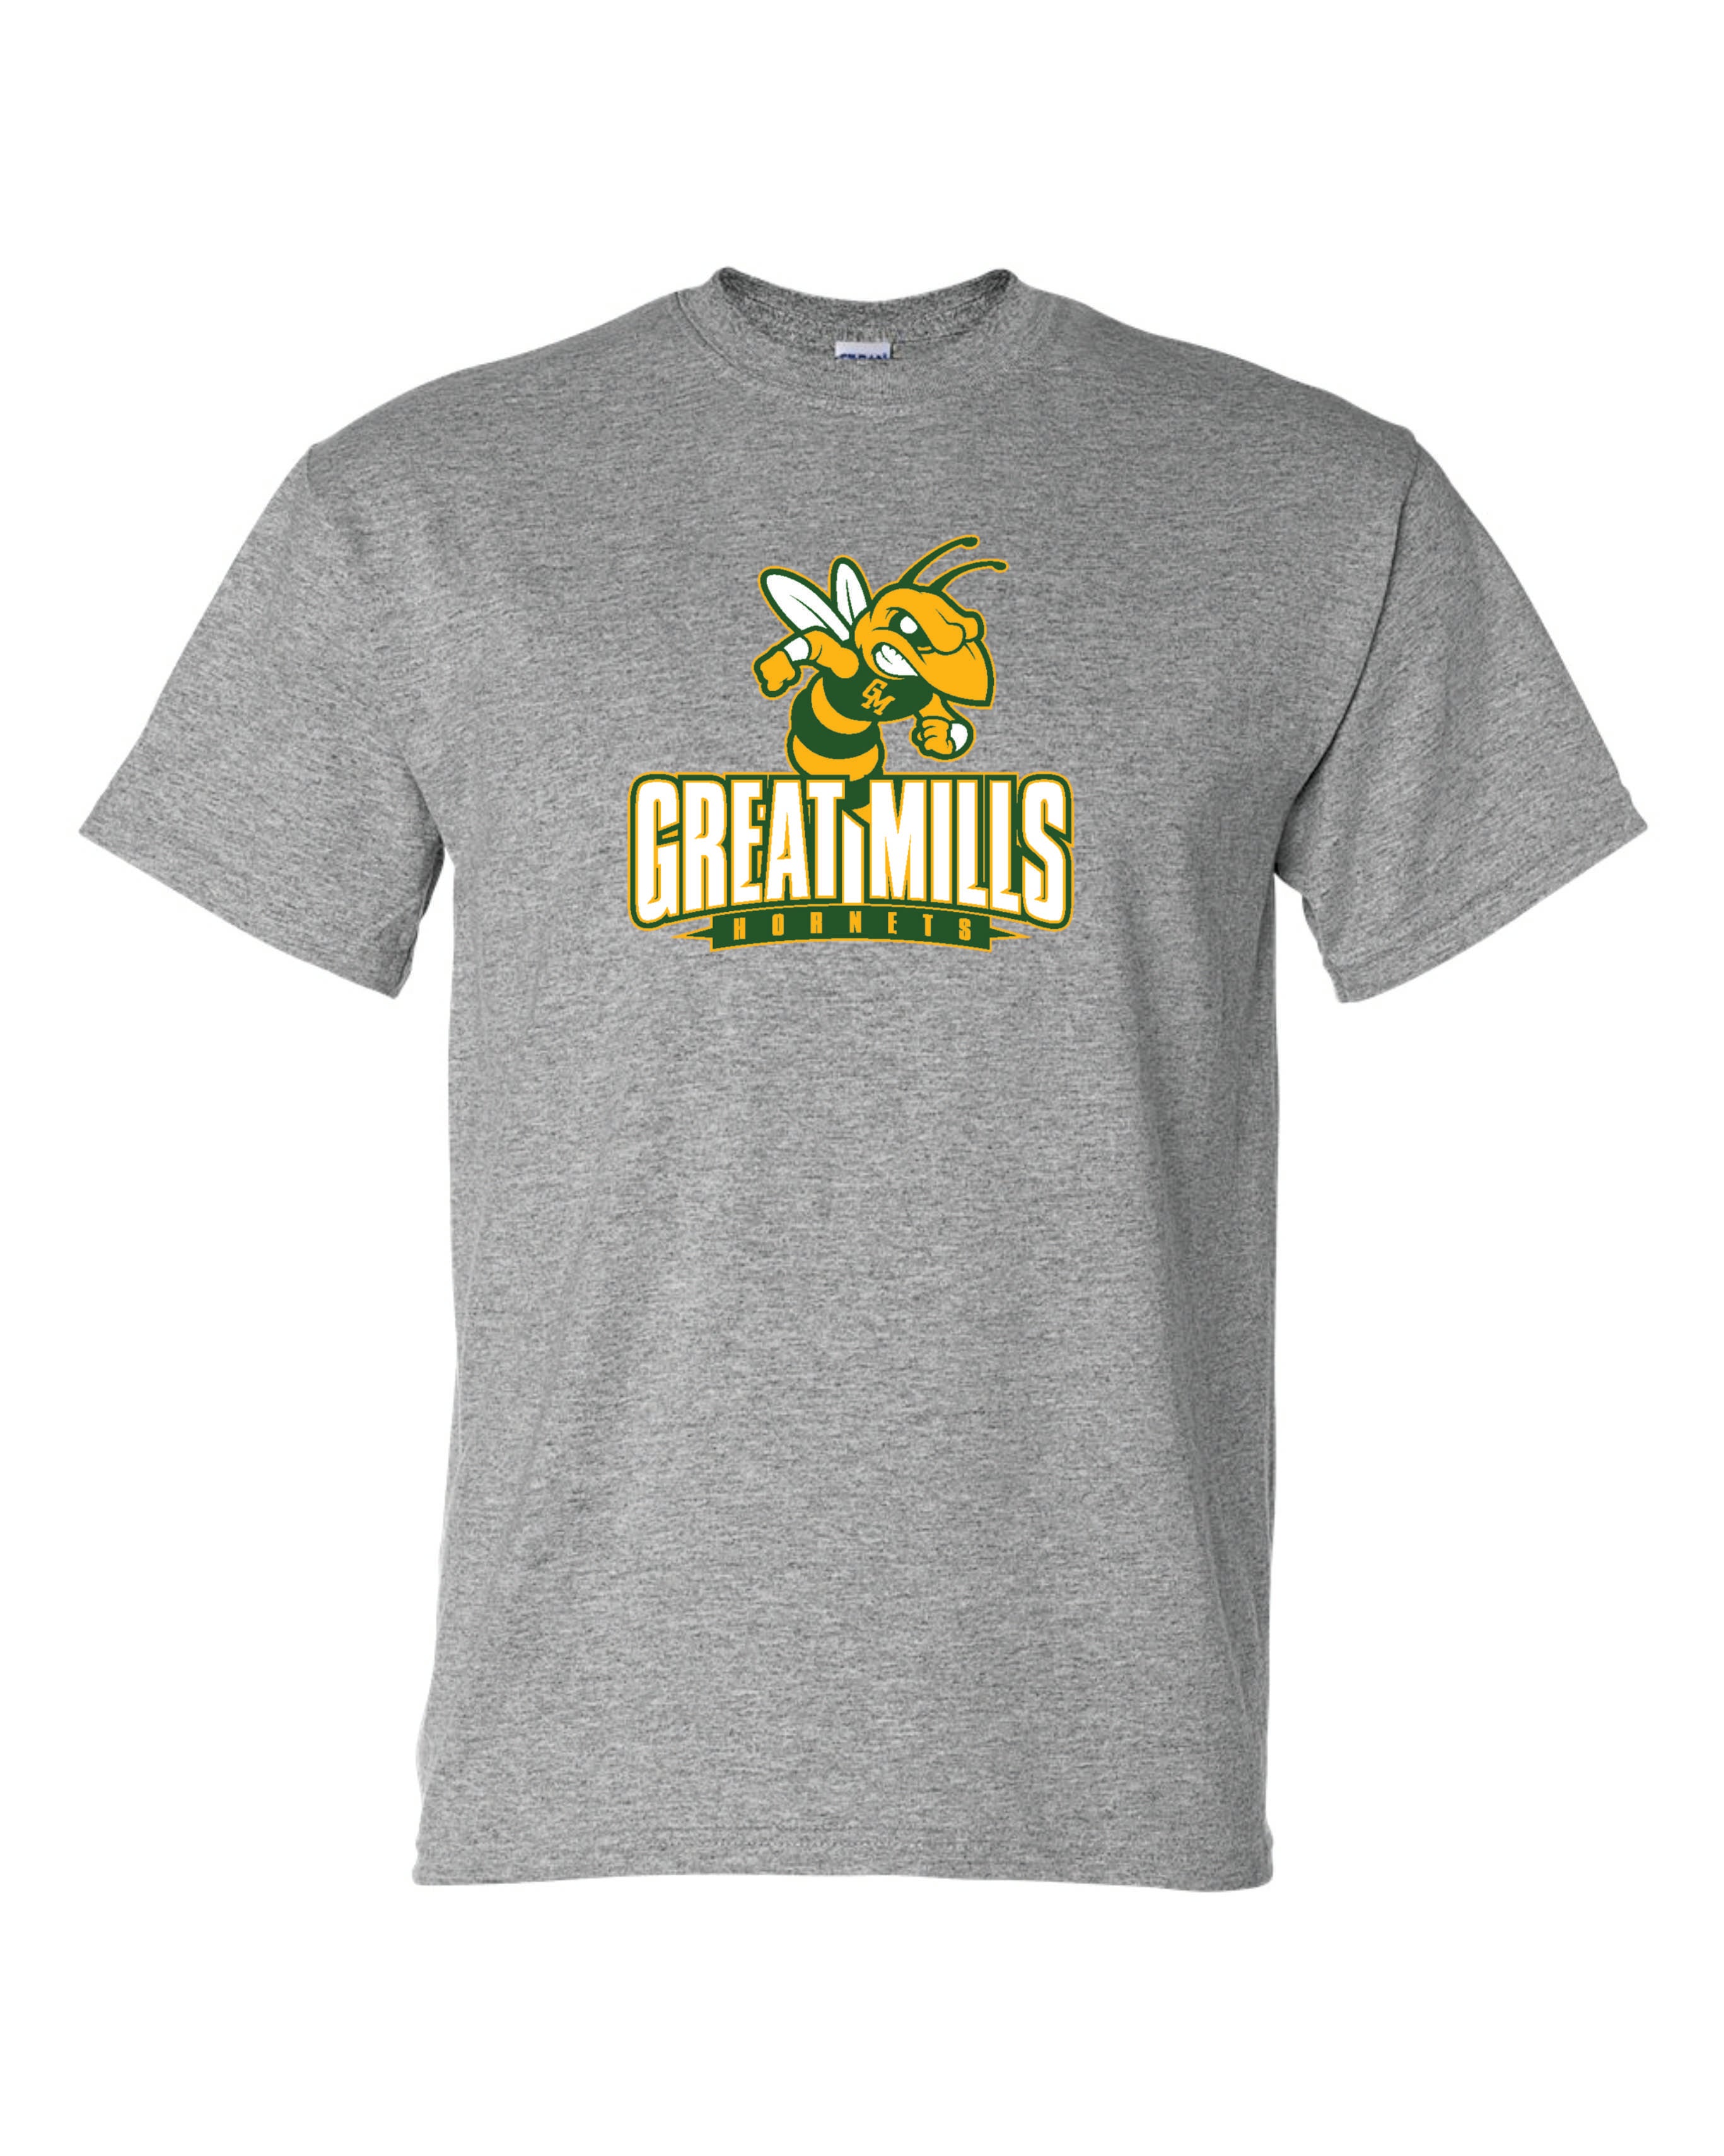 Great Mills Cross Country Short Sleeve T-Shirt 50/50 Blend